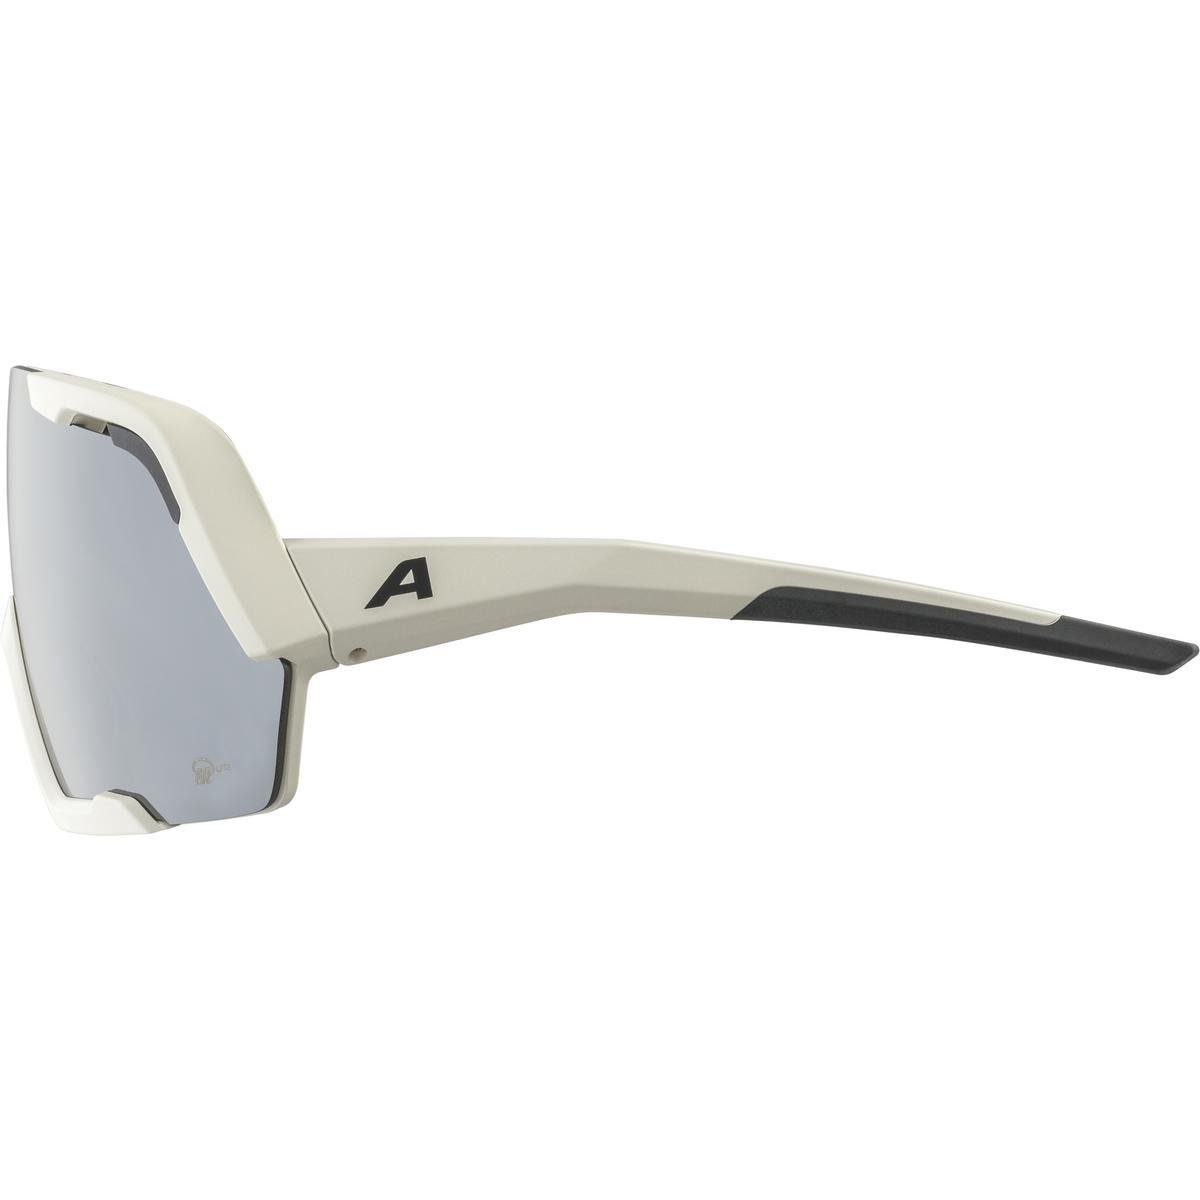 Alpina Sonnenbrille Alpina Sportbrille Q-LITE ROCKET A8682 BOLD grau